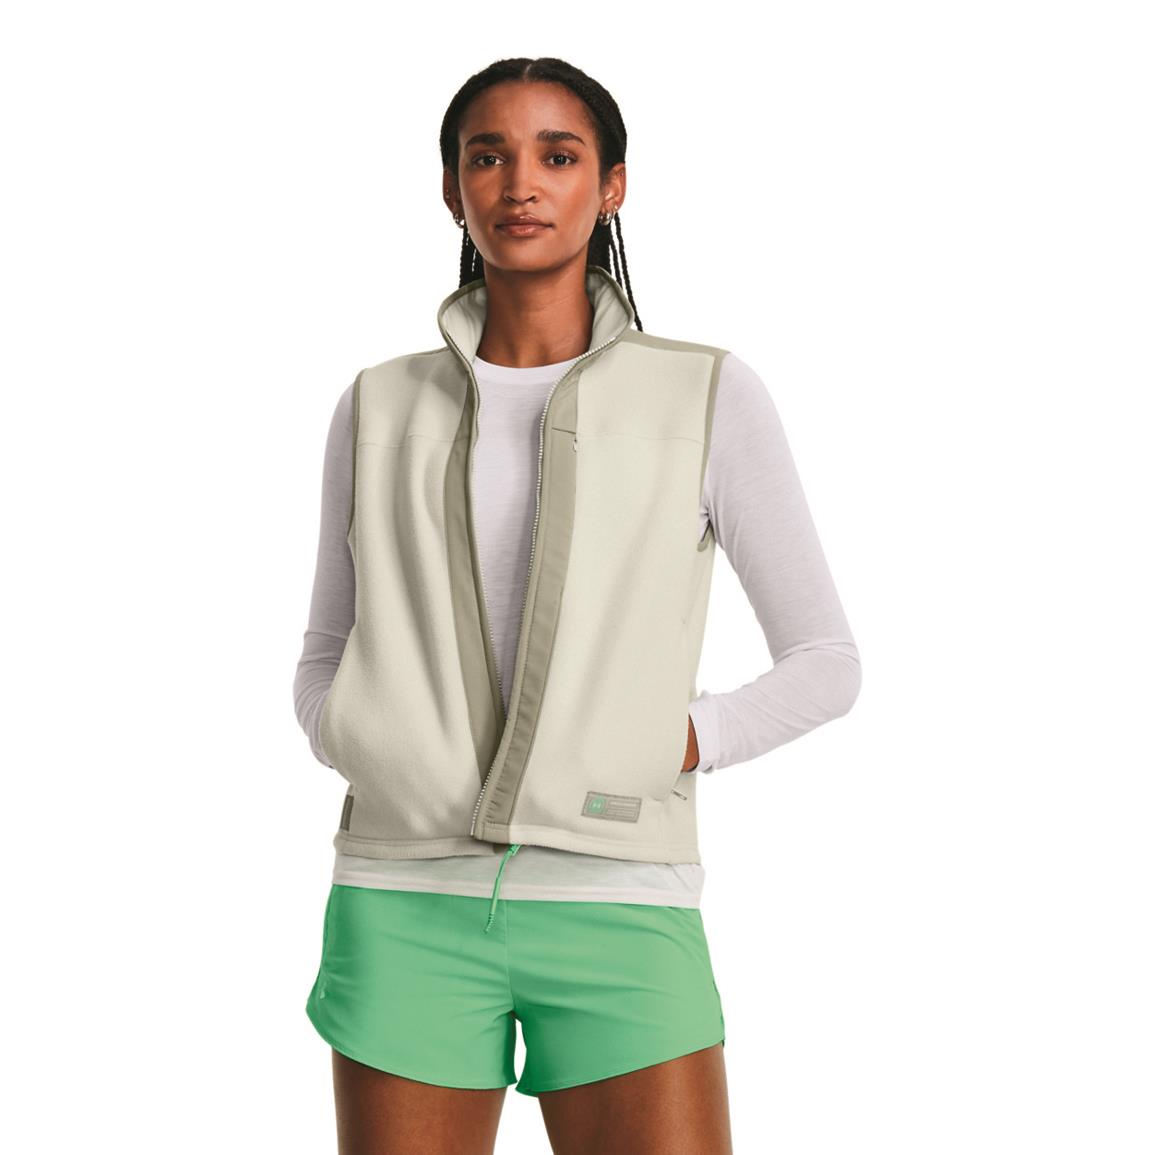 Under Armour Women's Microfleece Maxx Vest, Olive Tint/grove Green/green Screen